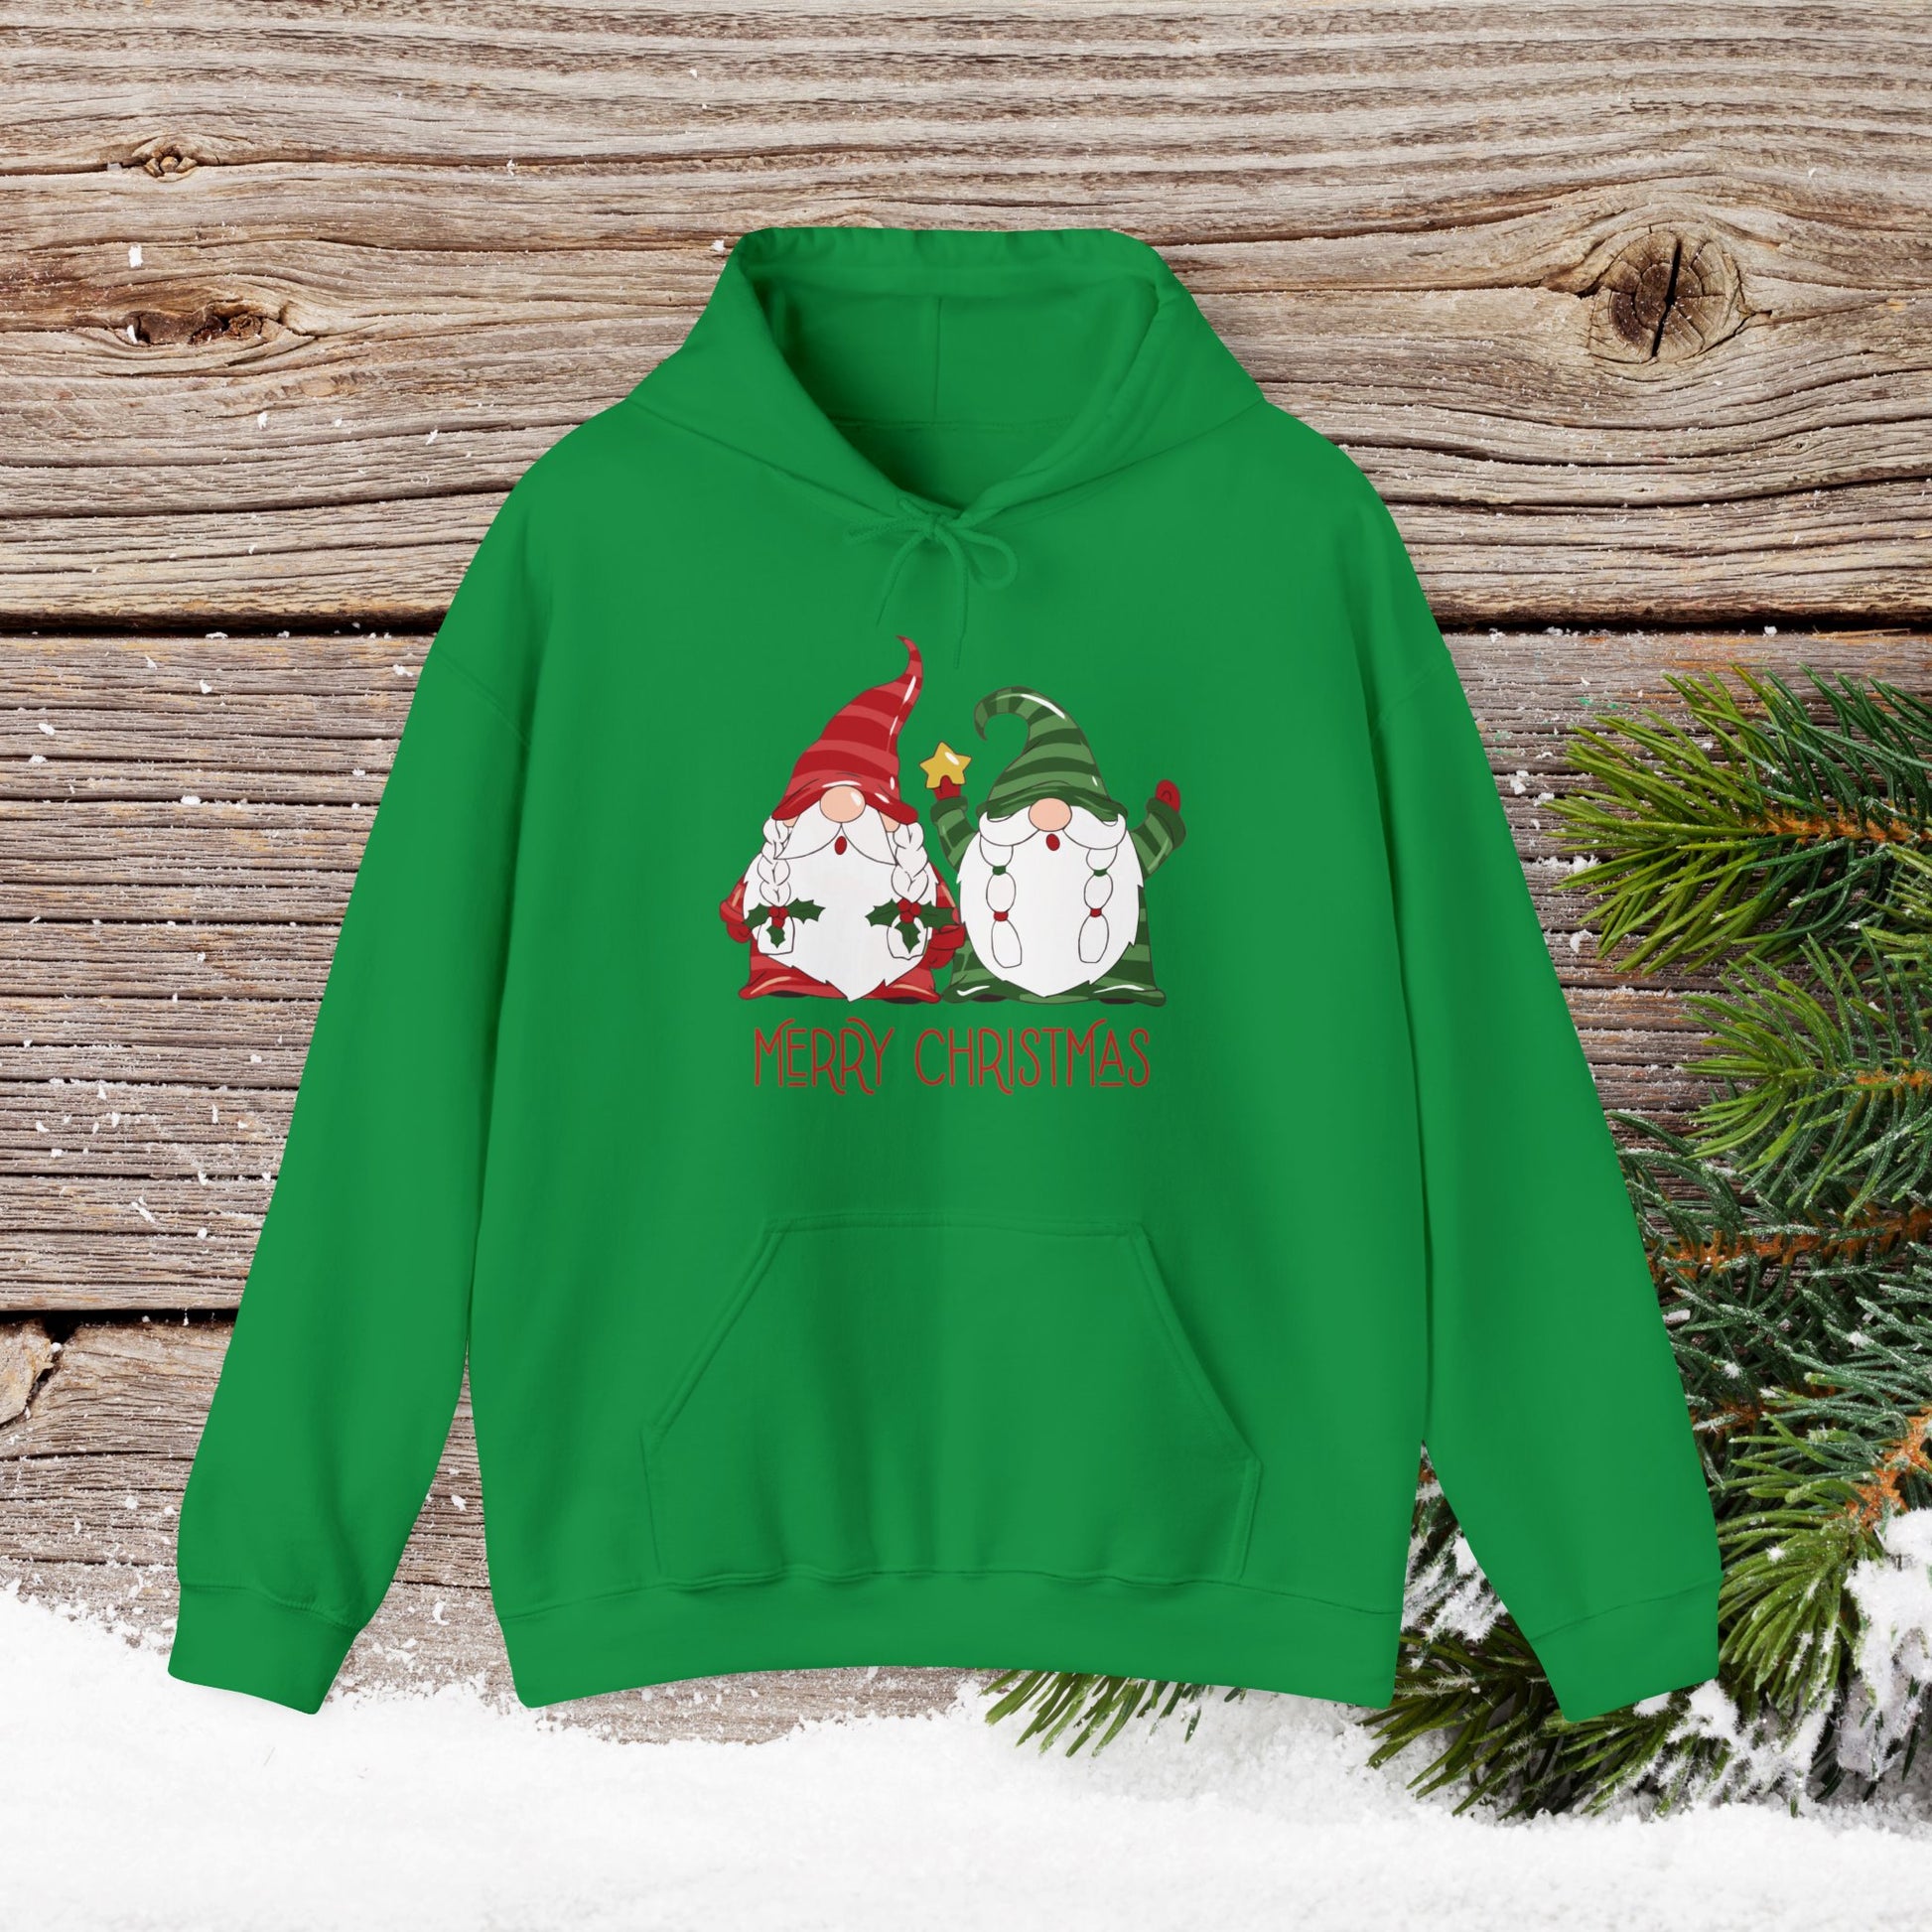 Christmas Hoodie - Gnome Merry Christmas - Cute Christmas Shirts - Youth and Adult Christmas Hooded Sweatshirt Hooded Sweatshirt Graphic Avenue Green Adult Small 